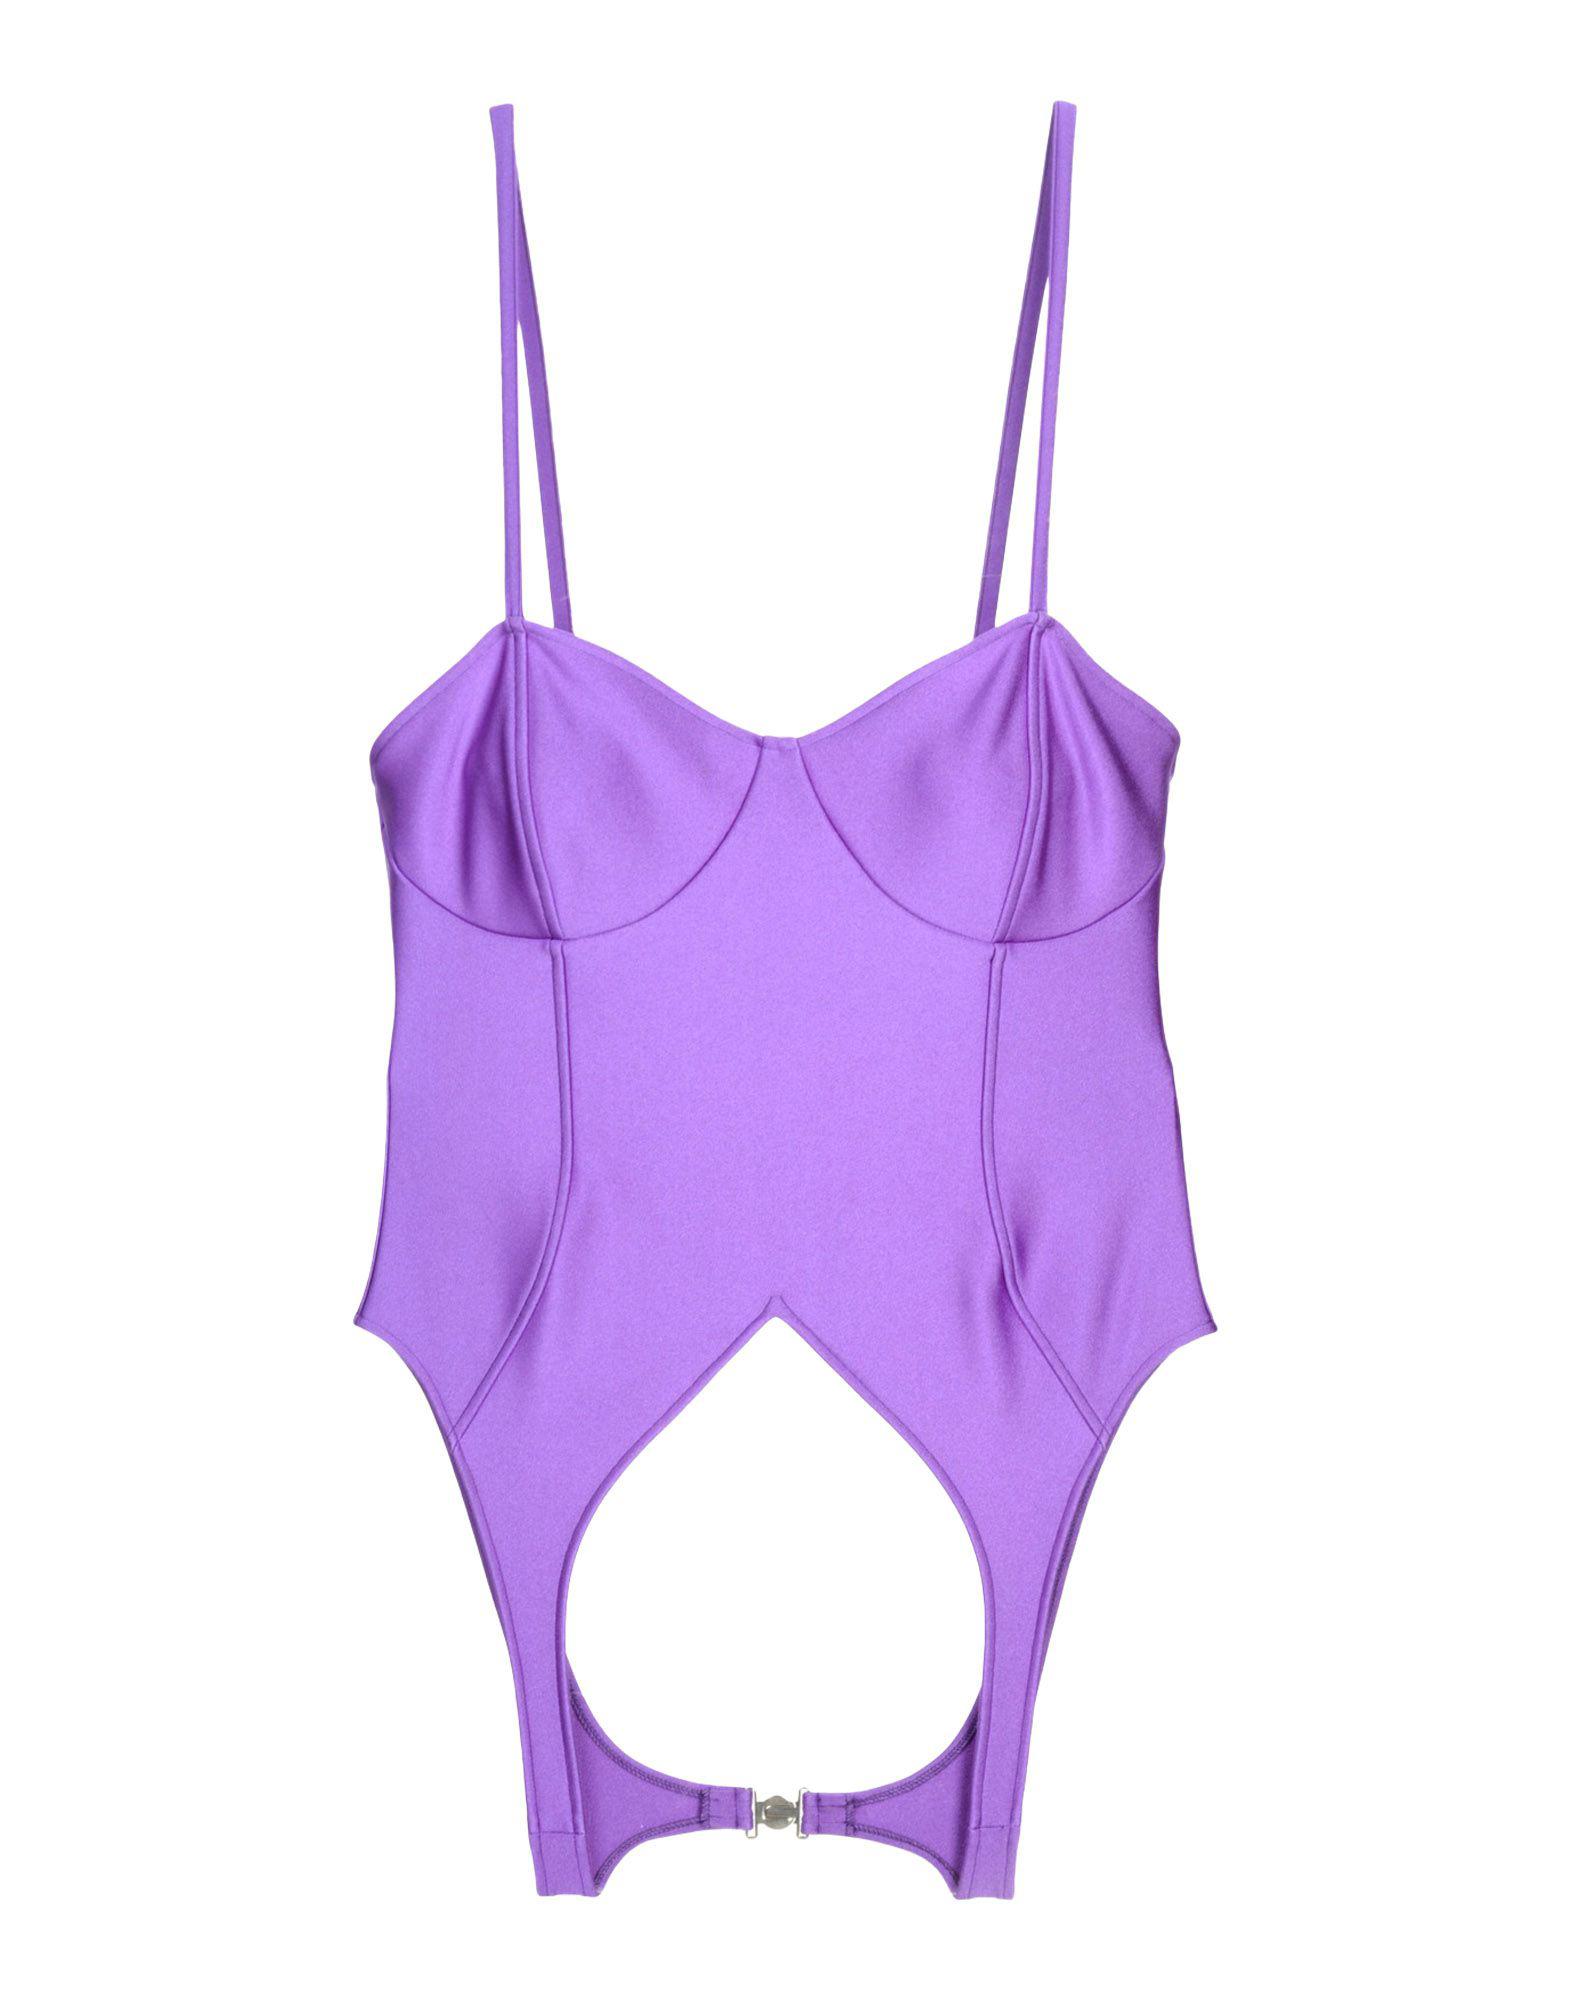 Balenciaga Synthetic Top in Purple - Lyst